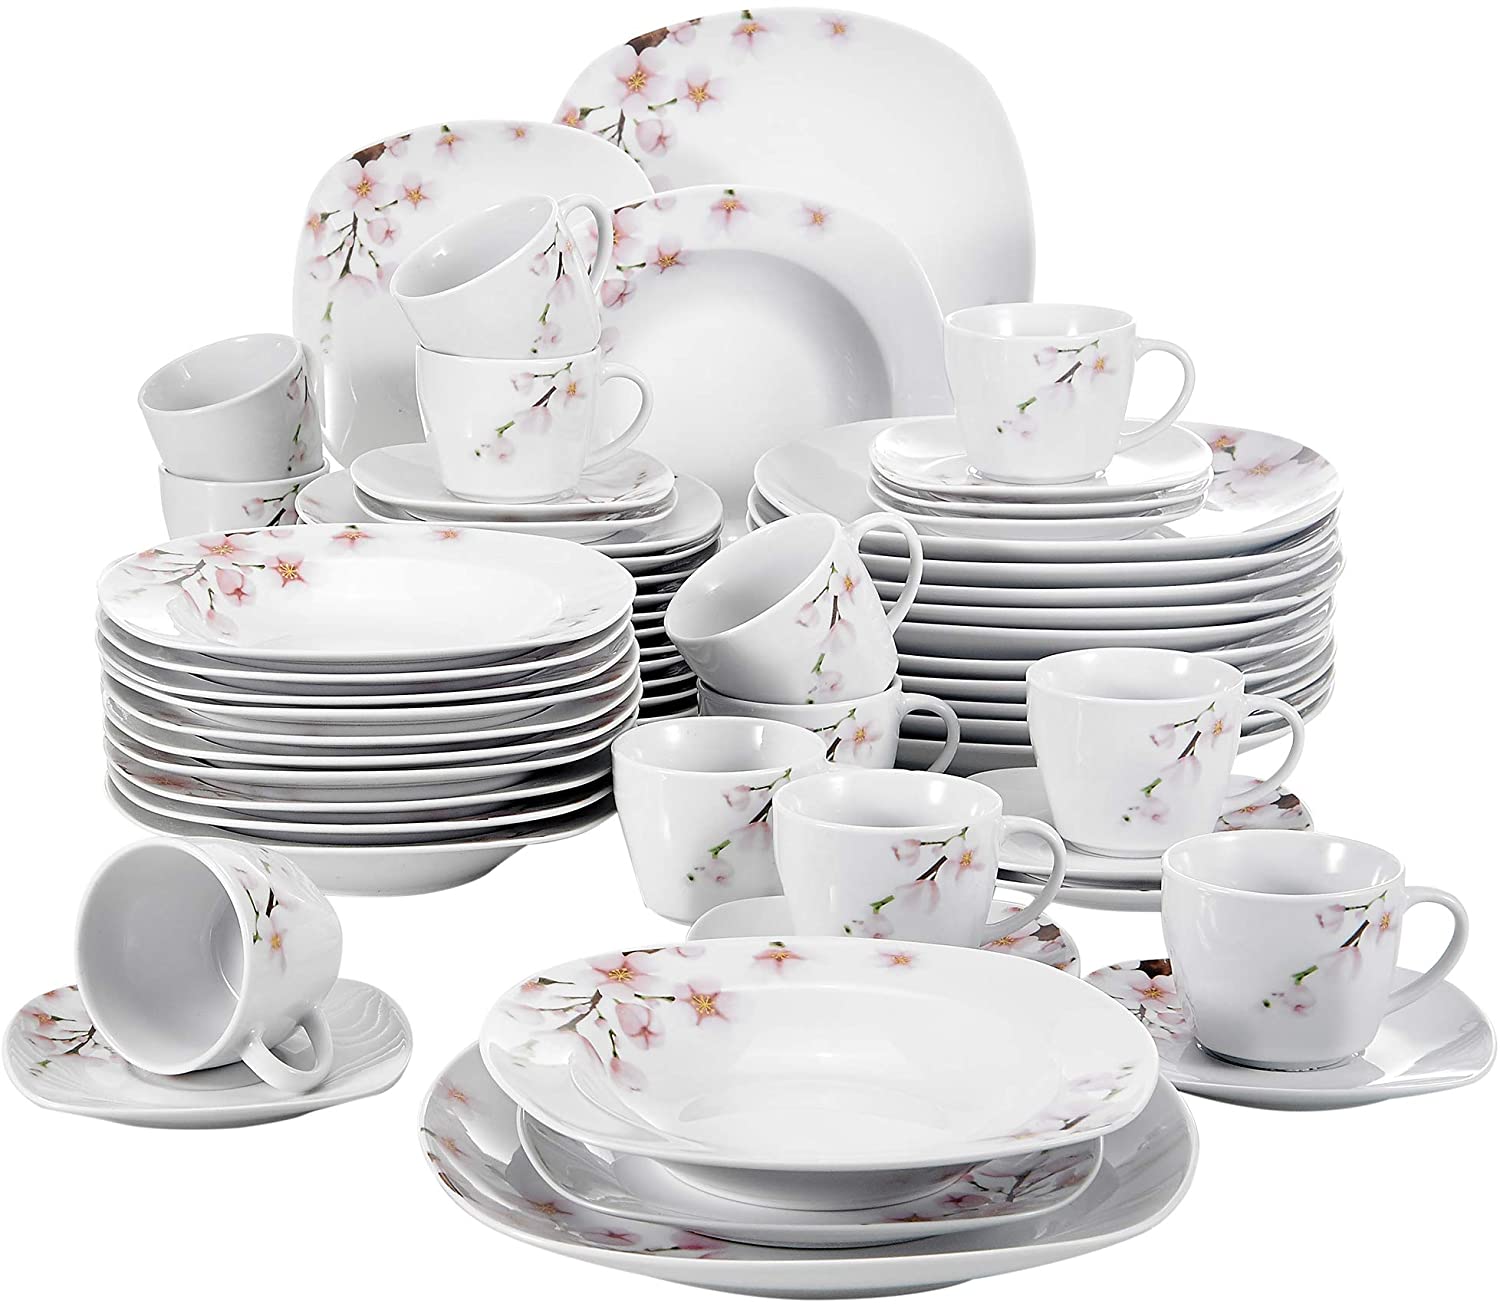 Veweet Annie Porcelain Dinner Service Set, 18 / 36-Piece Crockery Set, 20